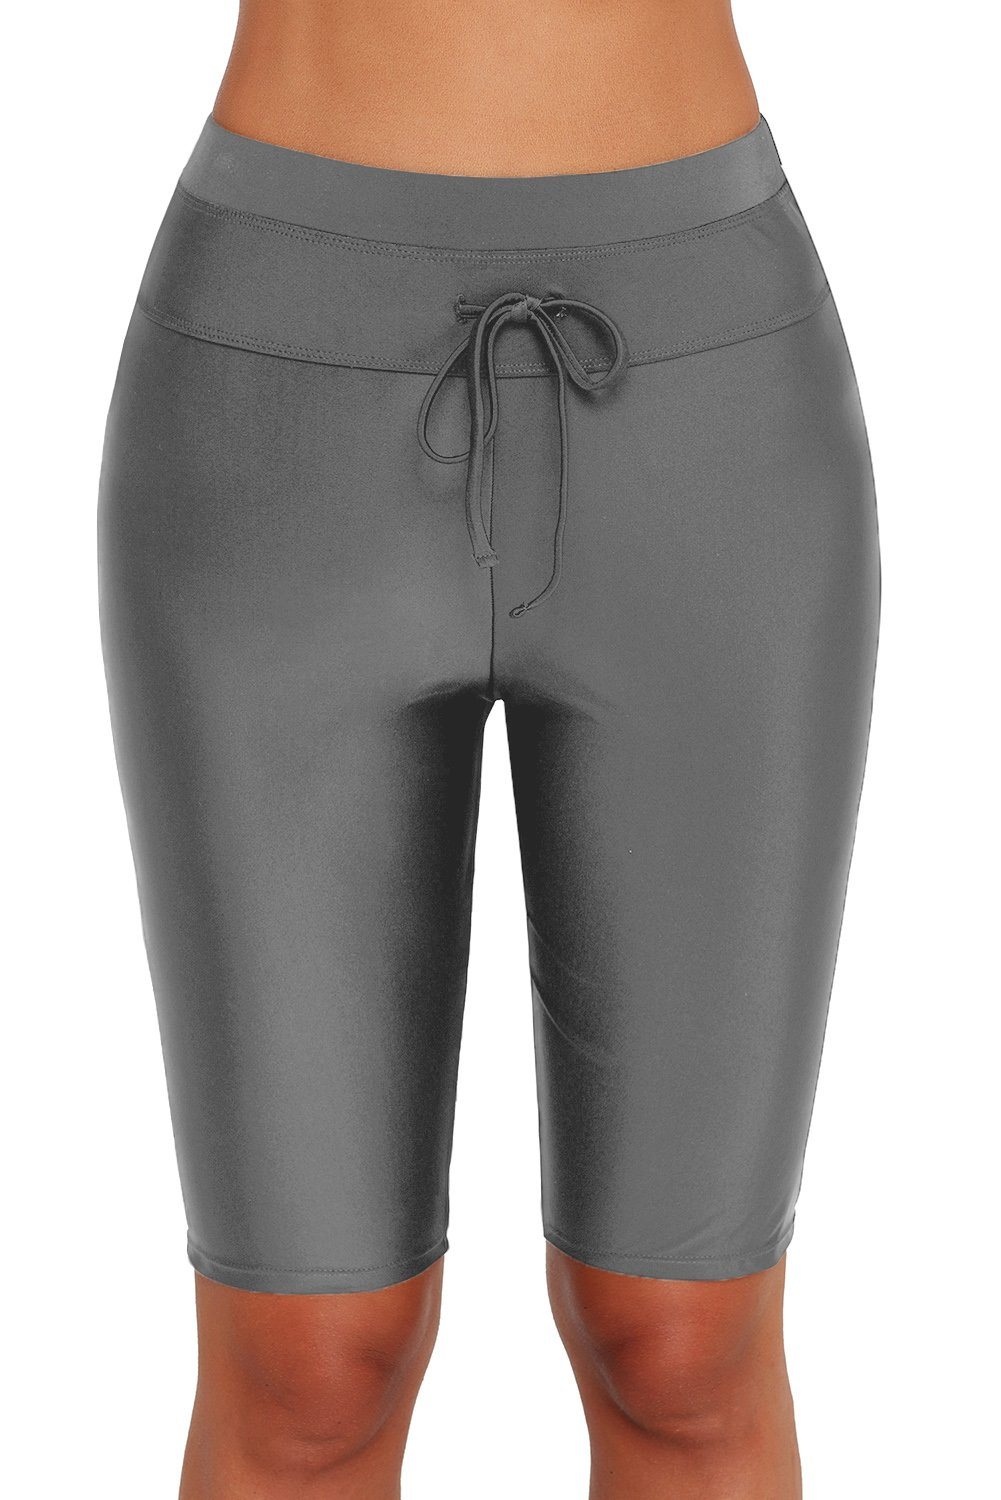 Women's Grey Fitted High Waist Tie Front Swim Shorts Crop Pants Leggings Swimwear Bottoms - KaleaBoutique.com